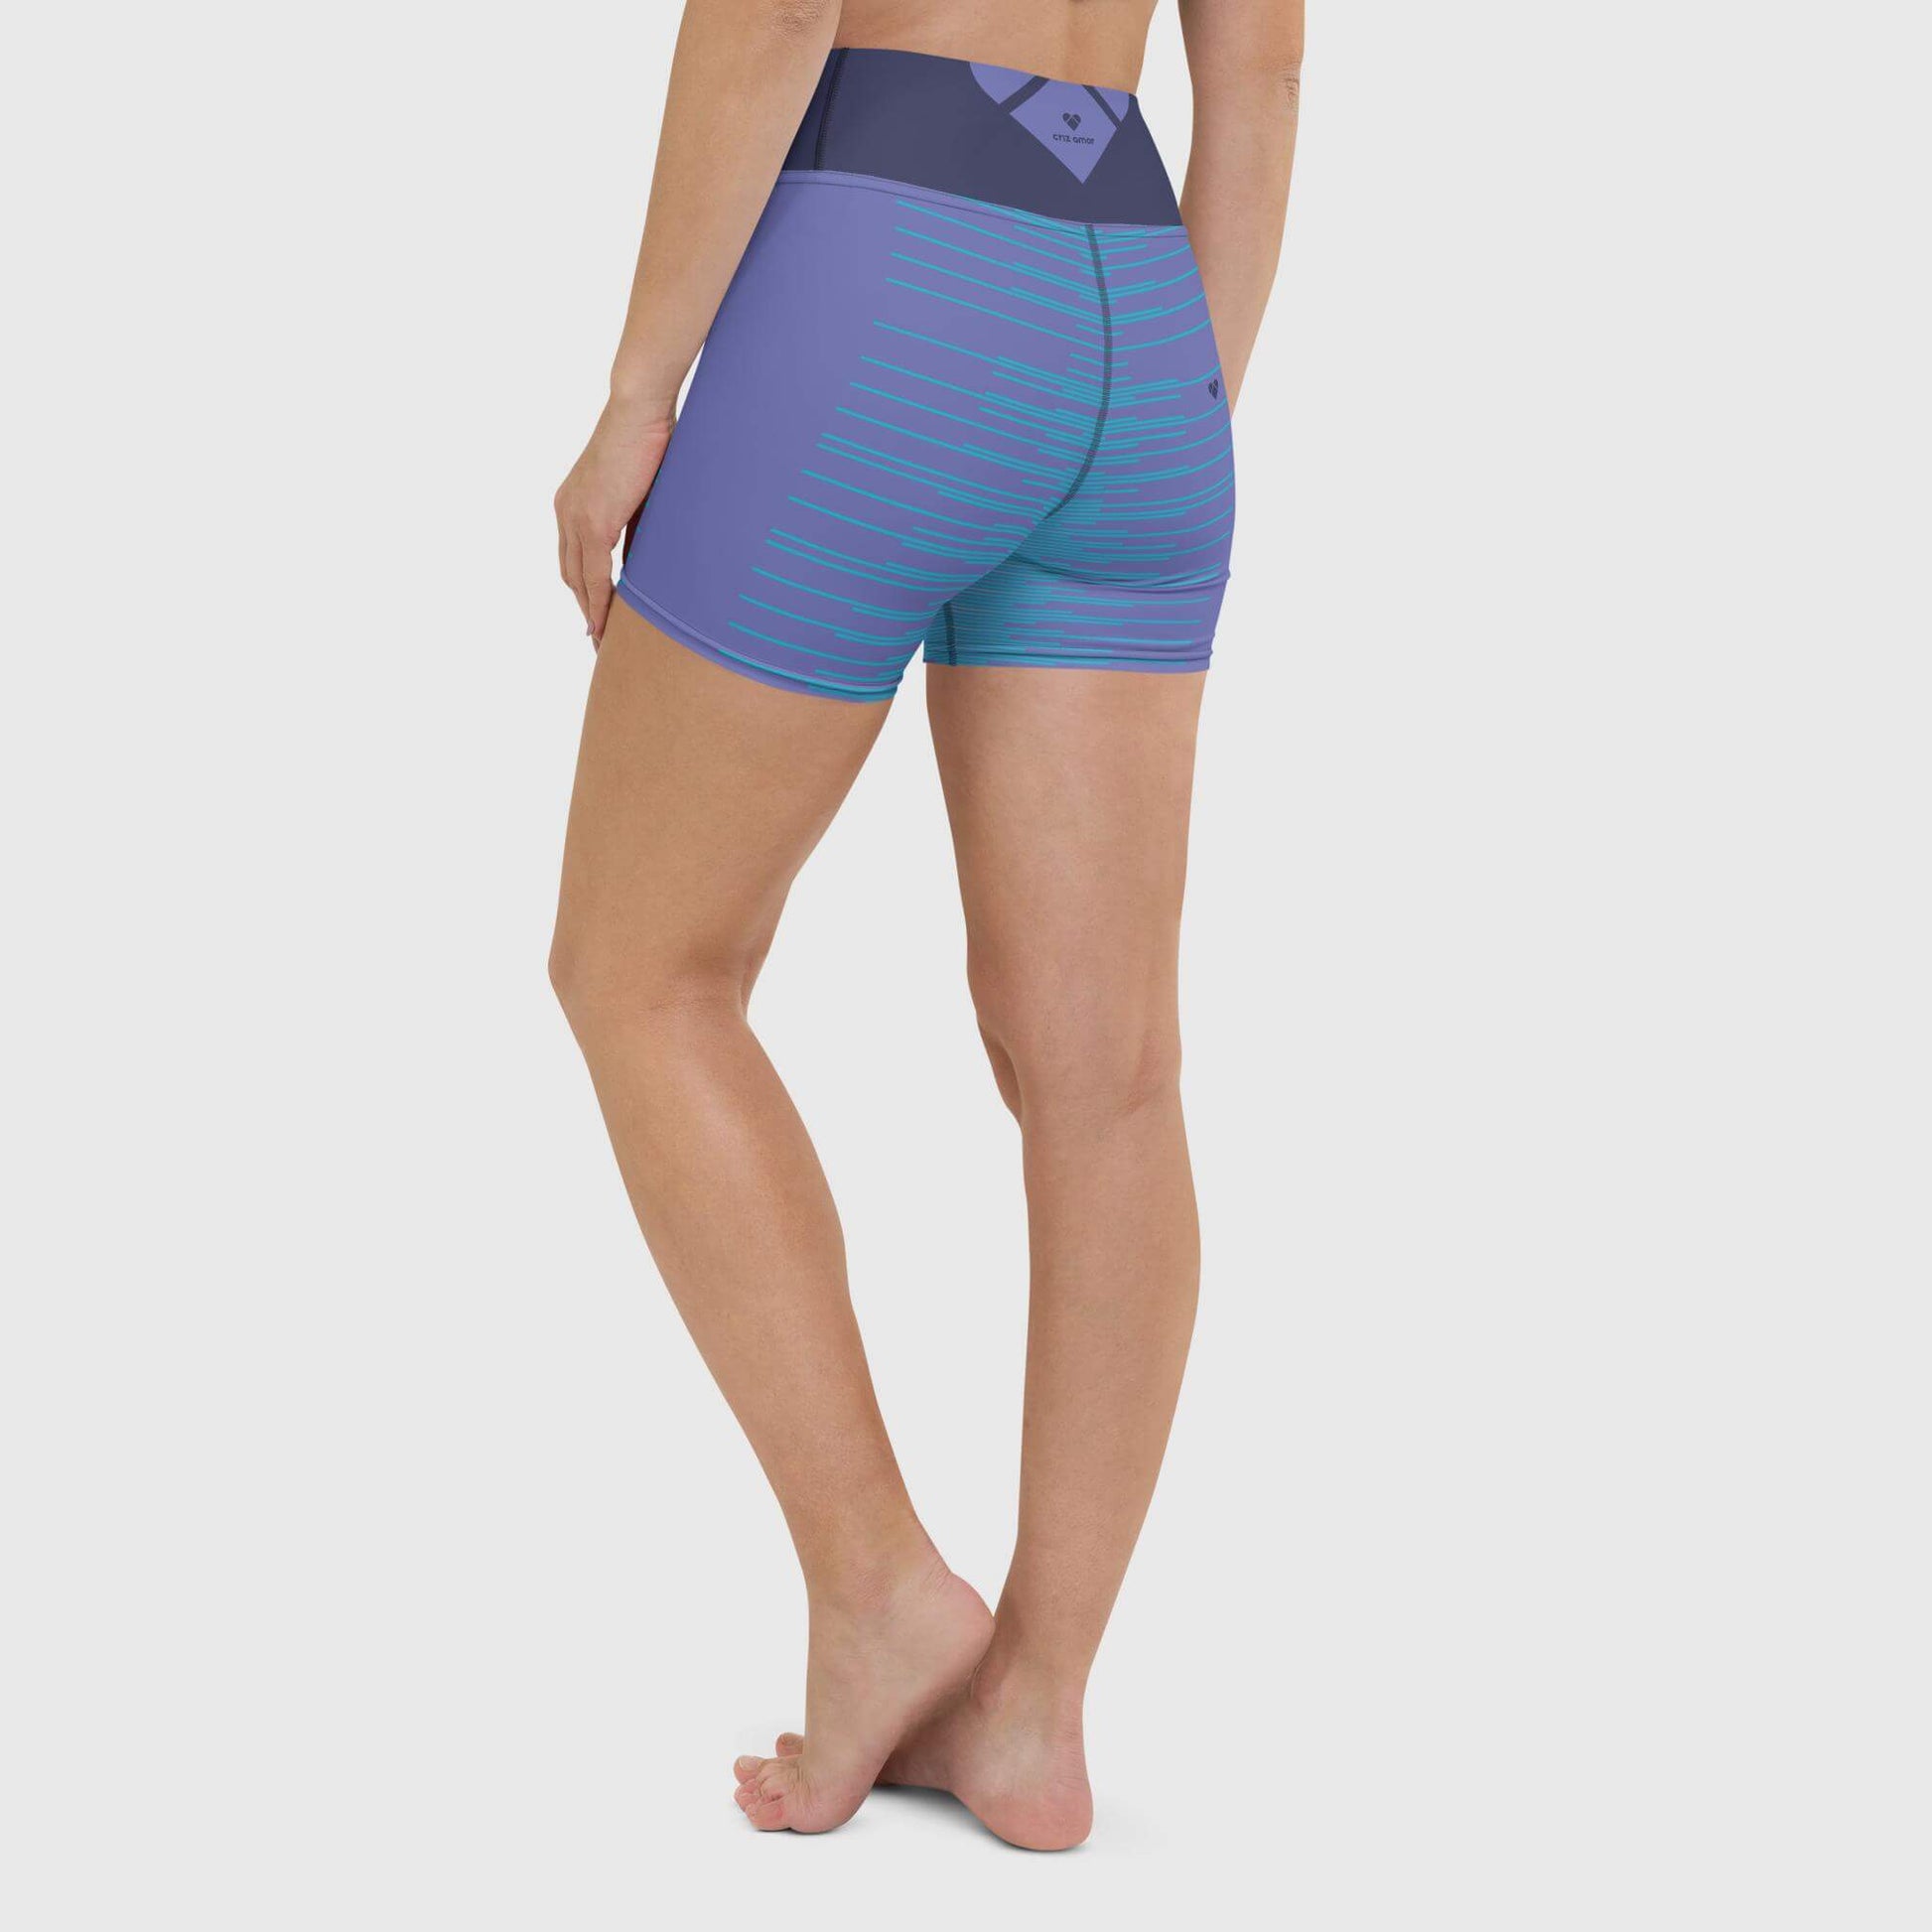 CRiZ AMOR Women's Yoga Shorts - Periwinkle Dual